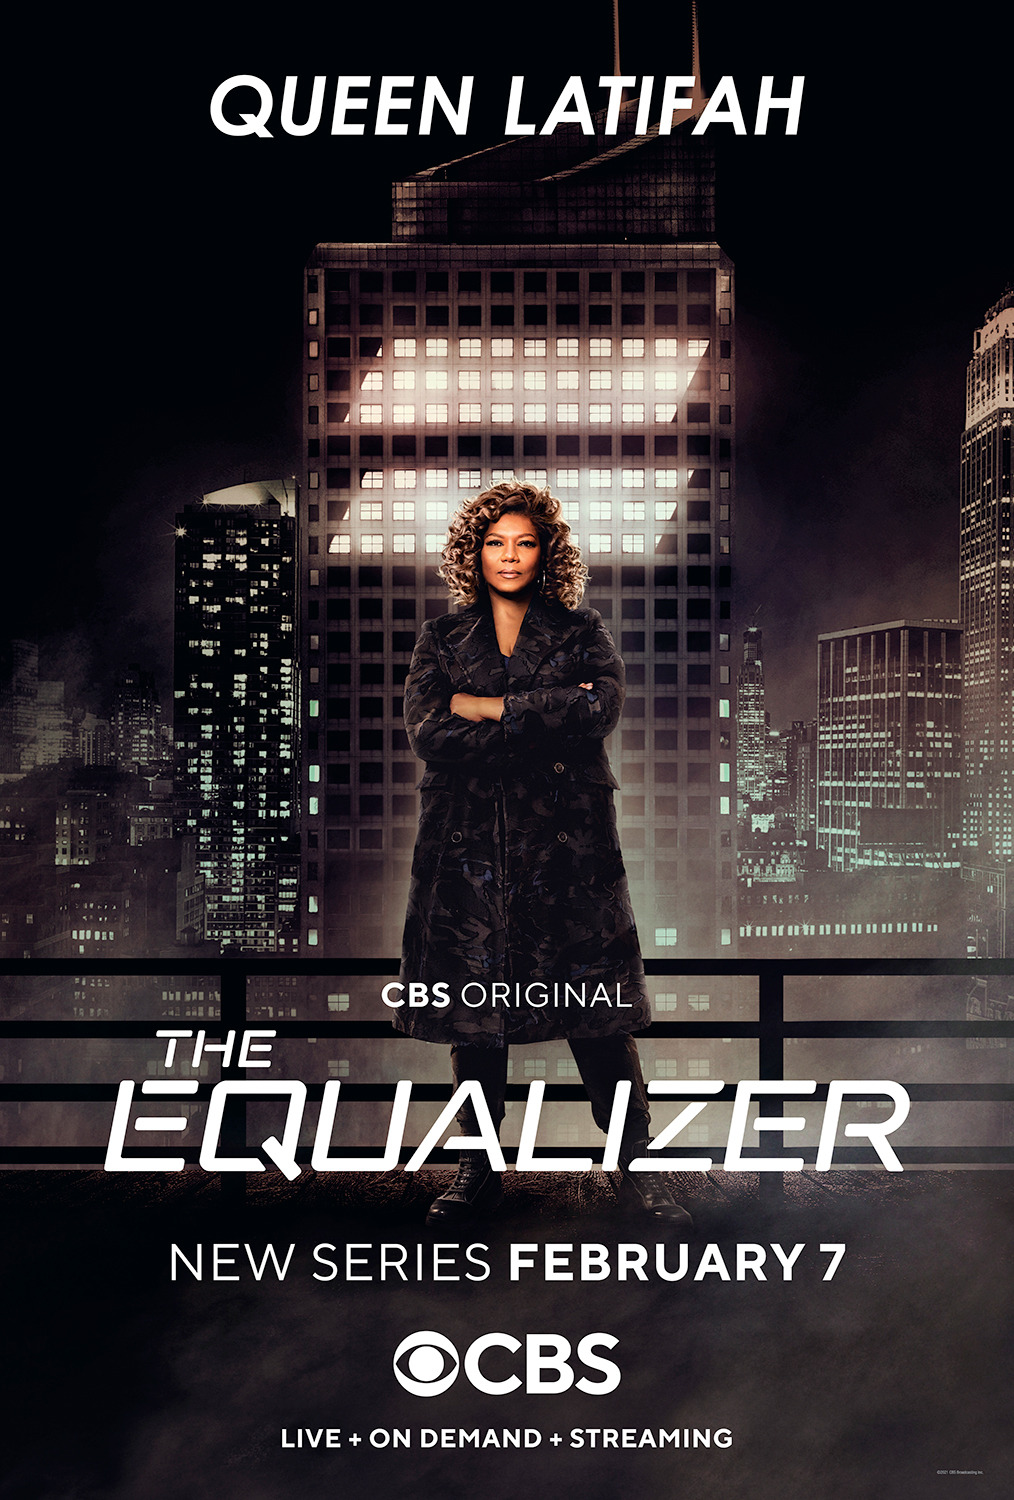 The Equalizer season 1